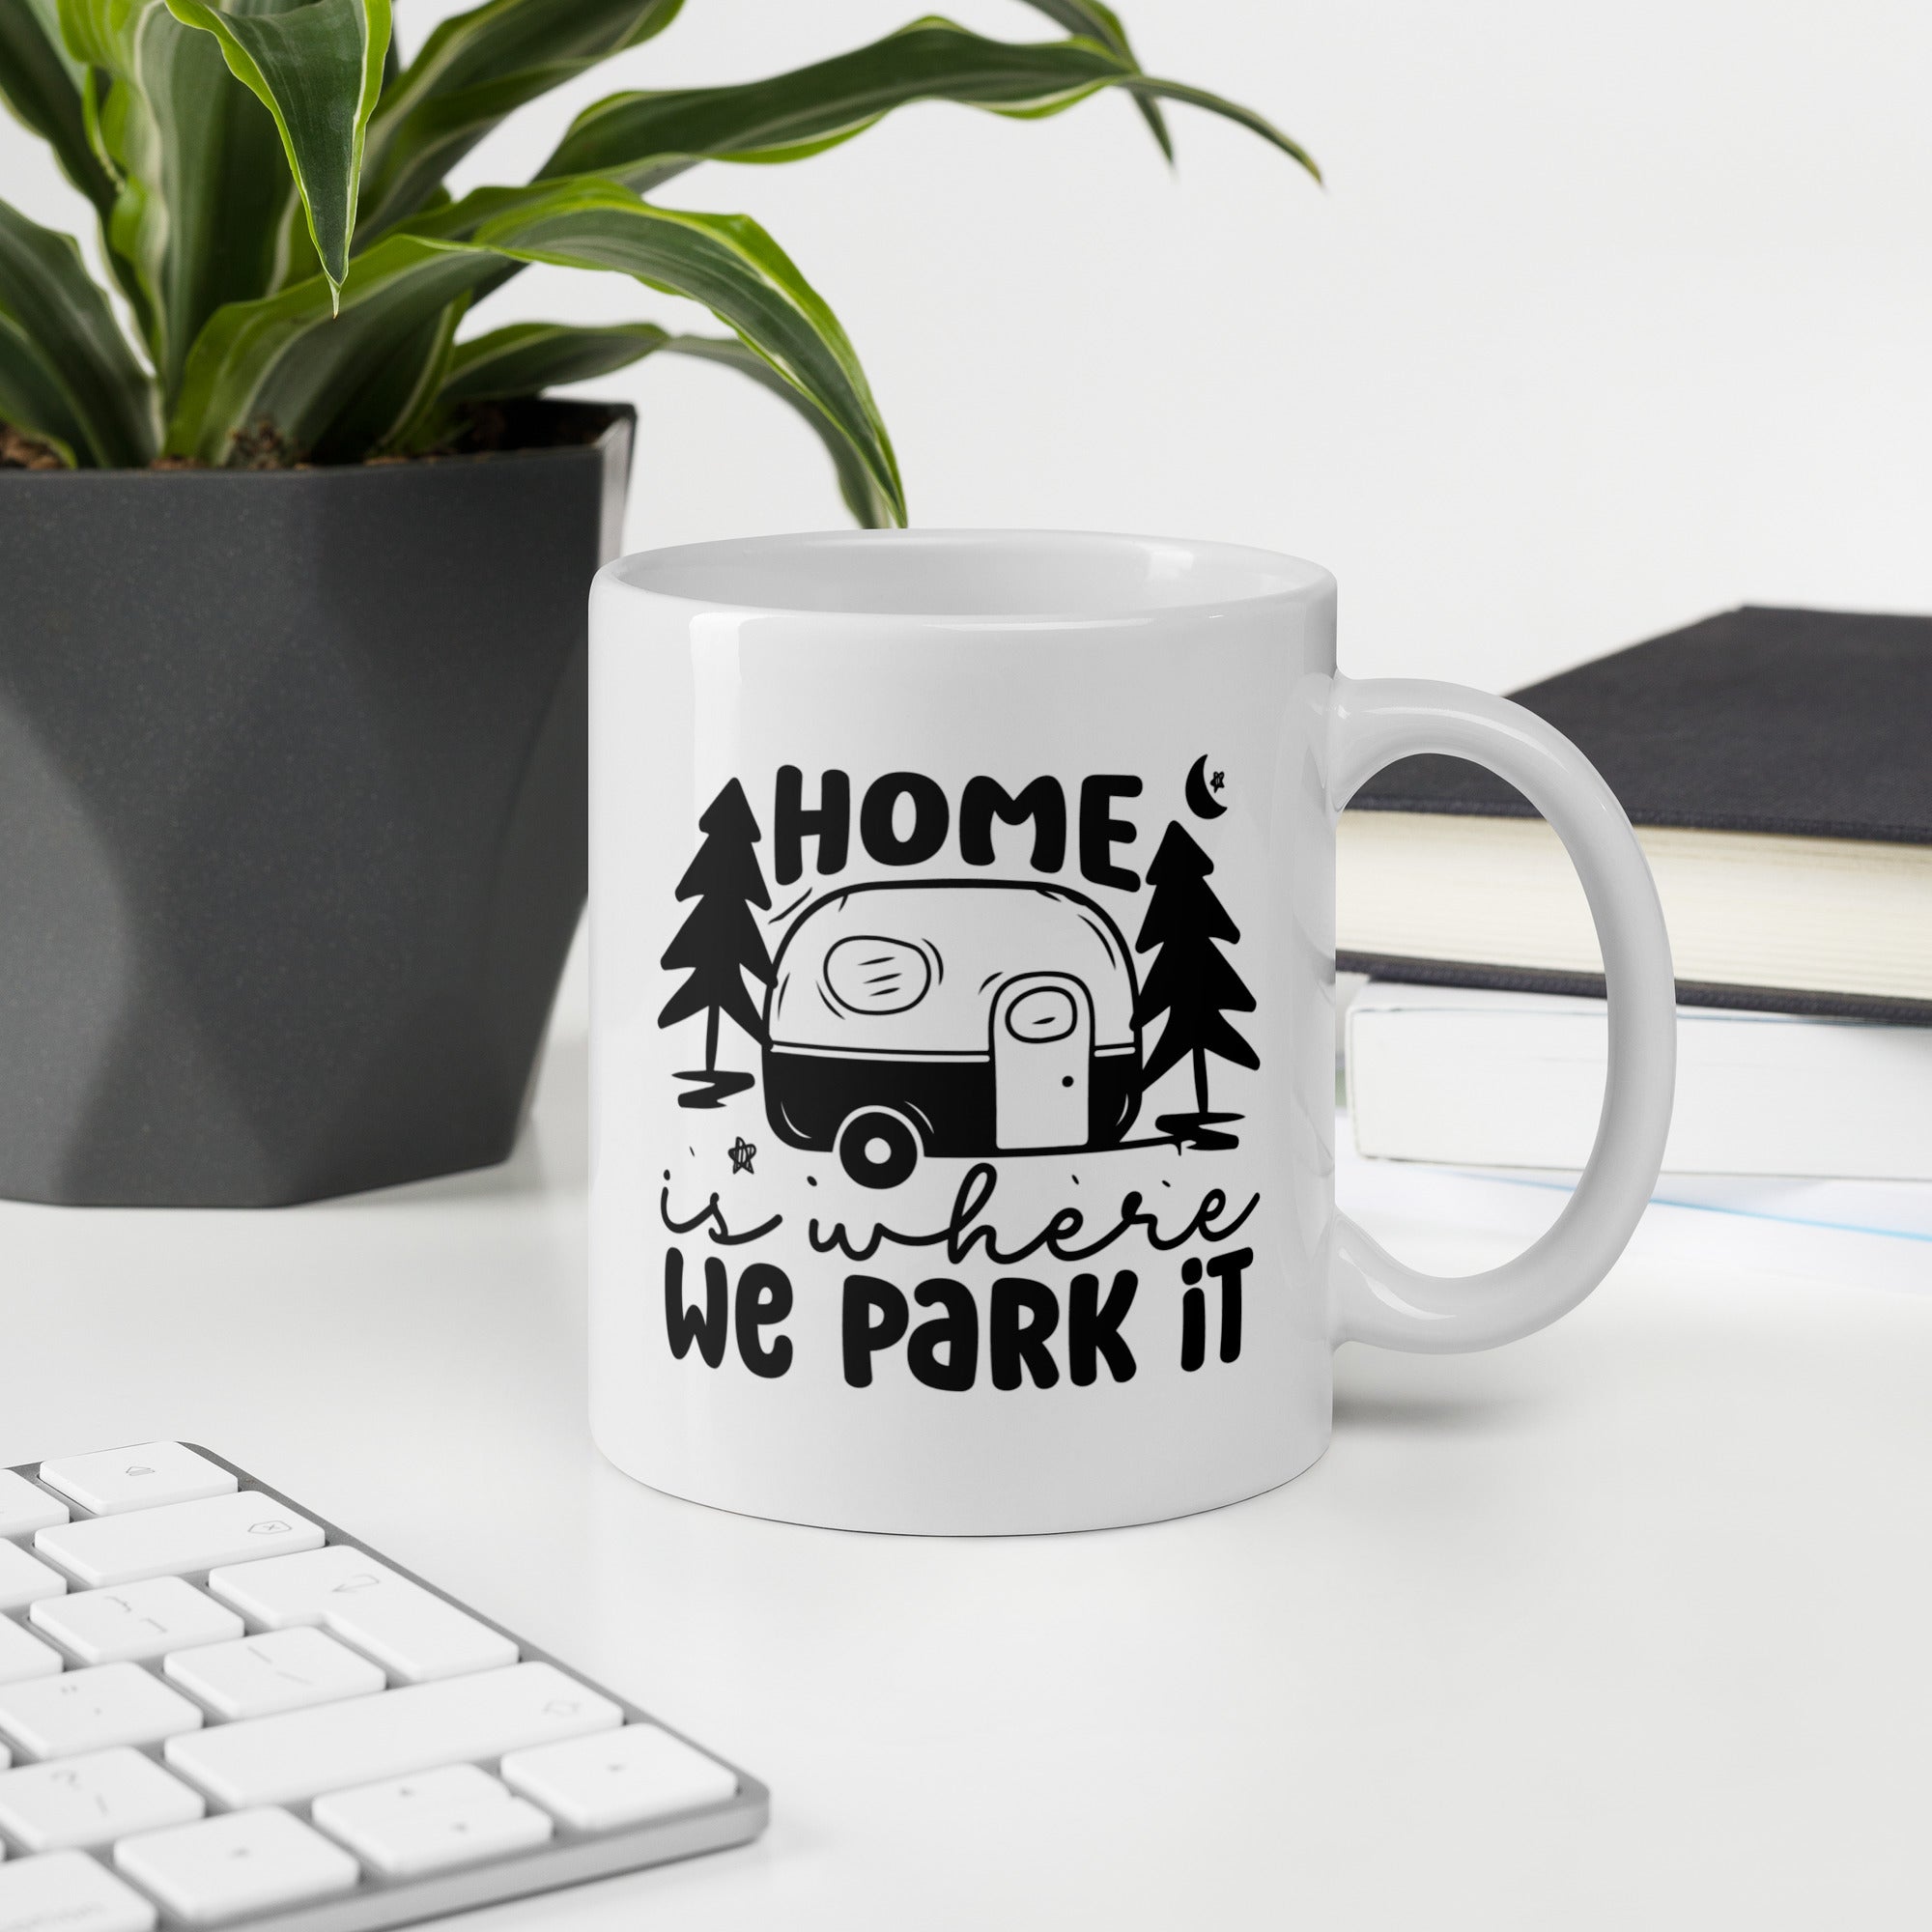 Home is Where We Park it - Mug